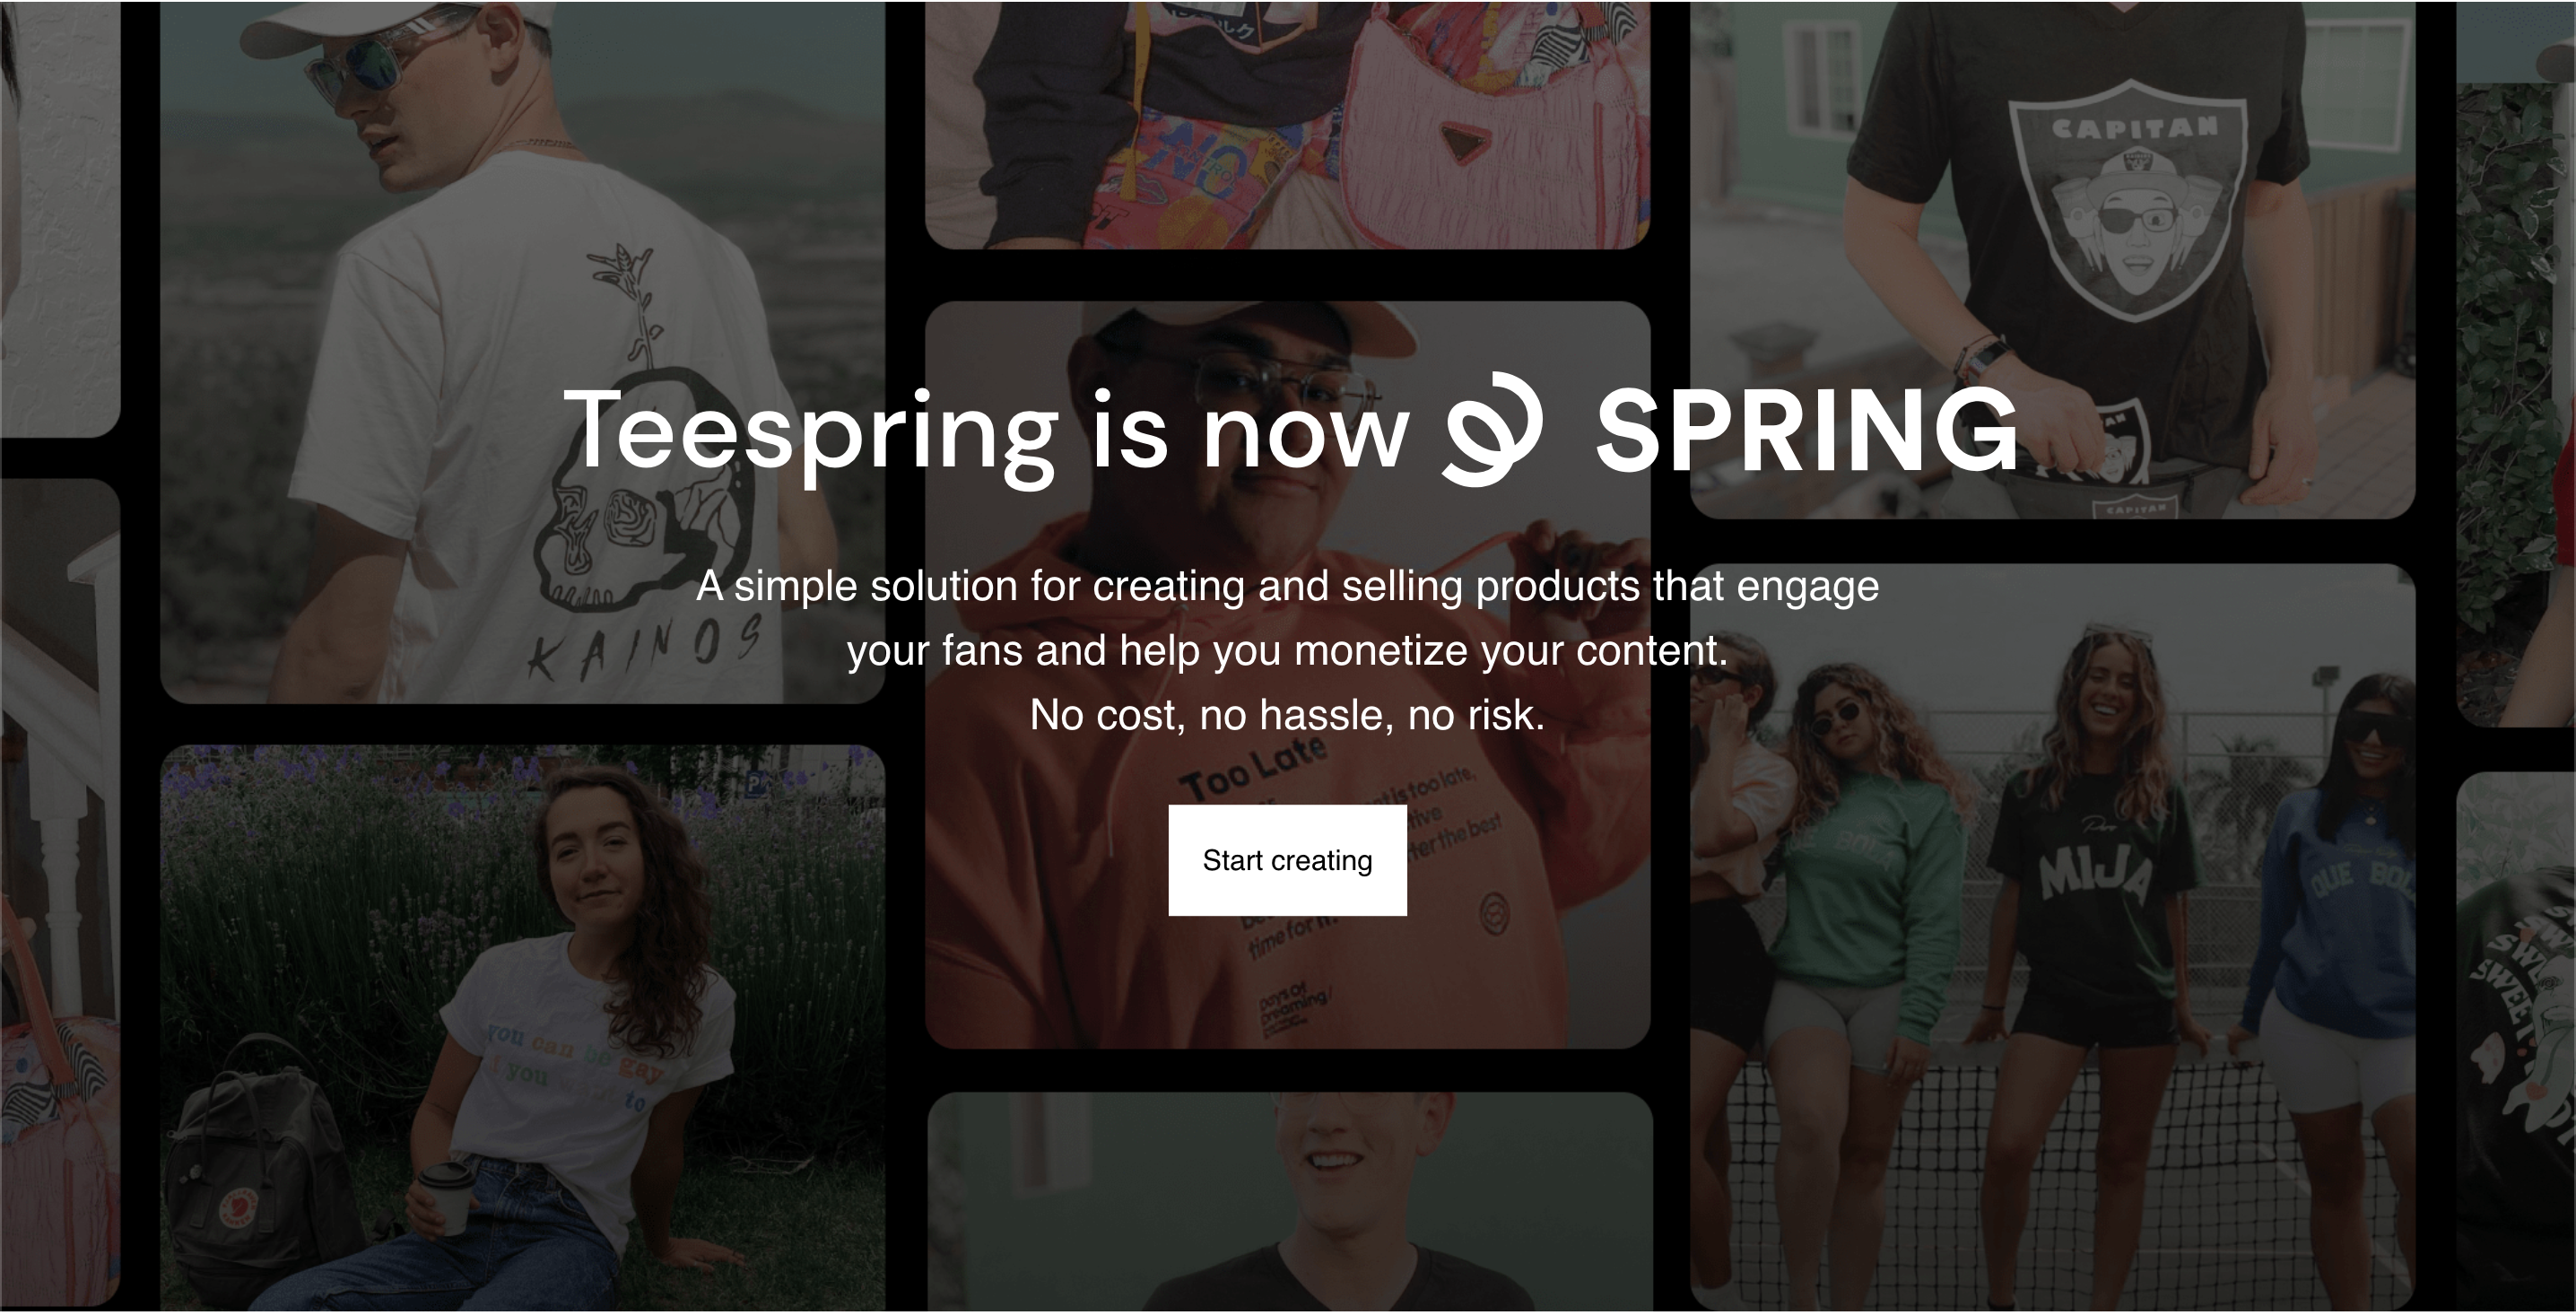 Spring's homepage. Headline reads "Teespring is now SPRING"